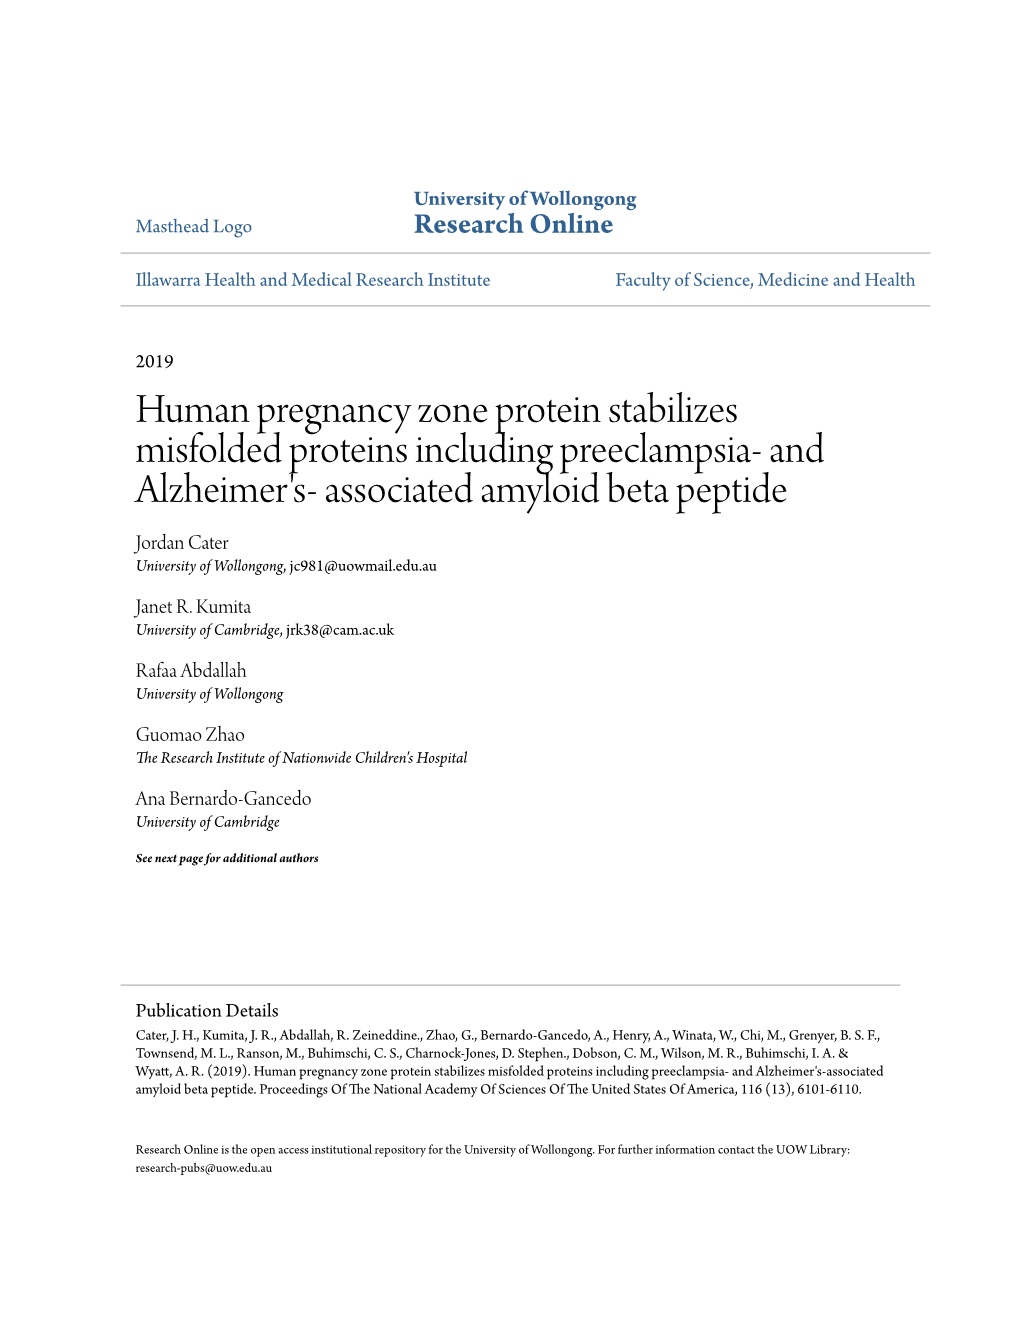 Human Pregnancy Zone Protein Stabilizes